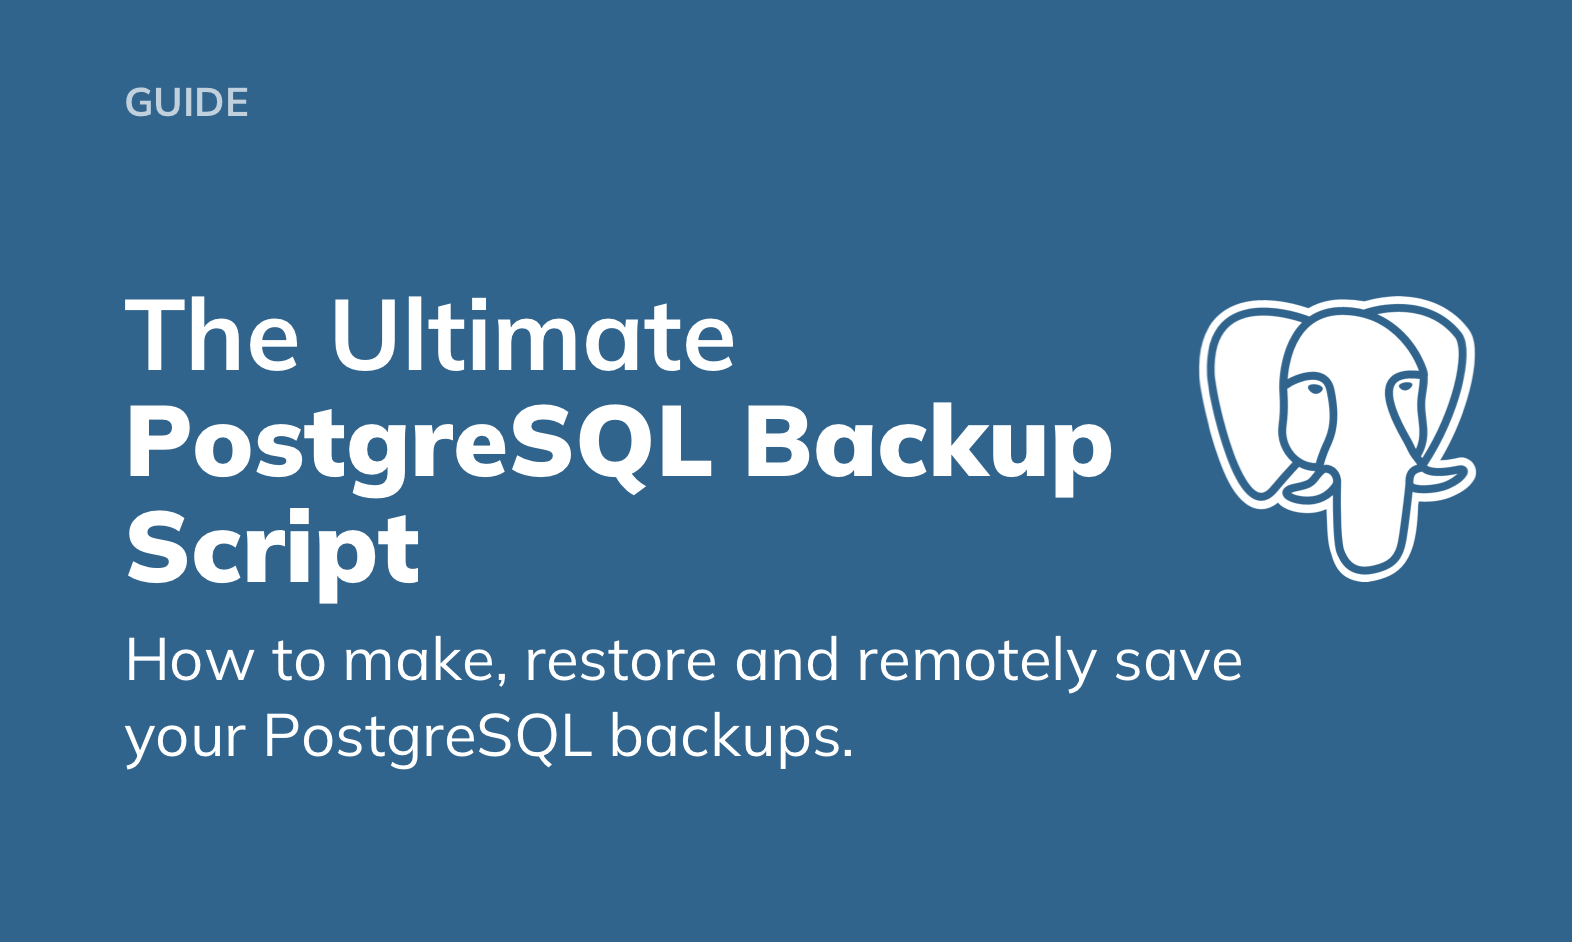 The Ultimate PostgreSQL Database Backup Guide